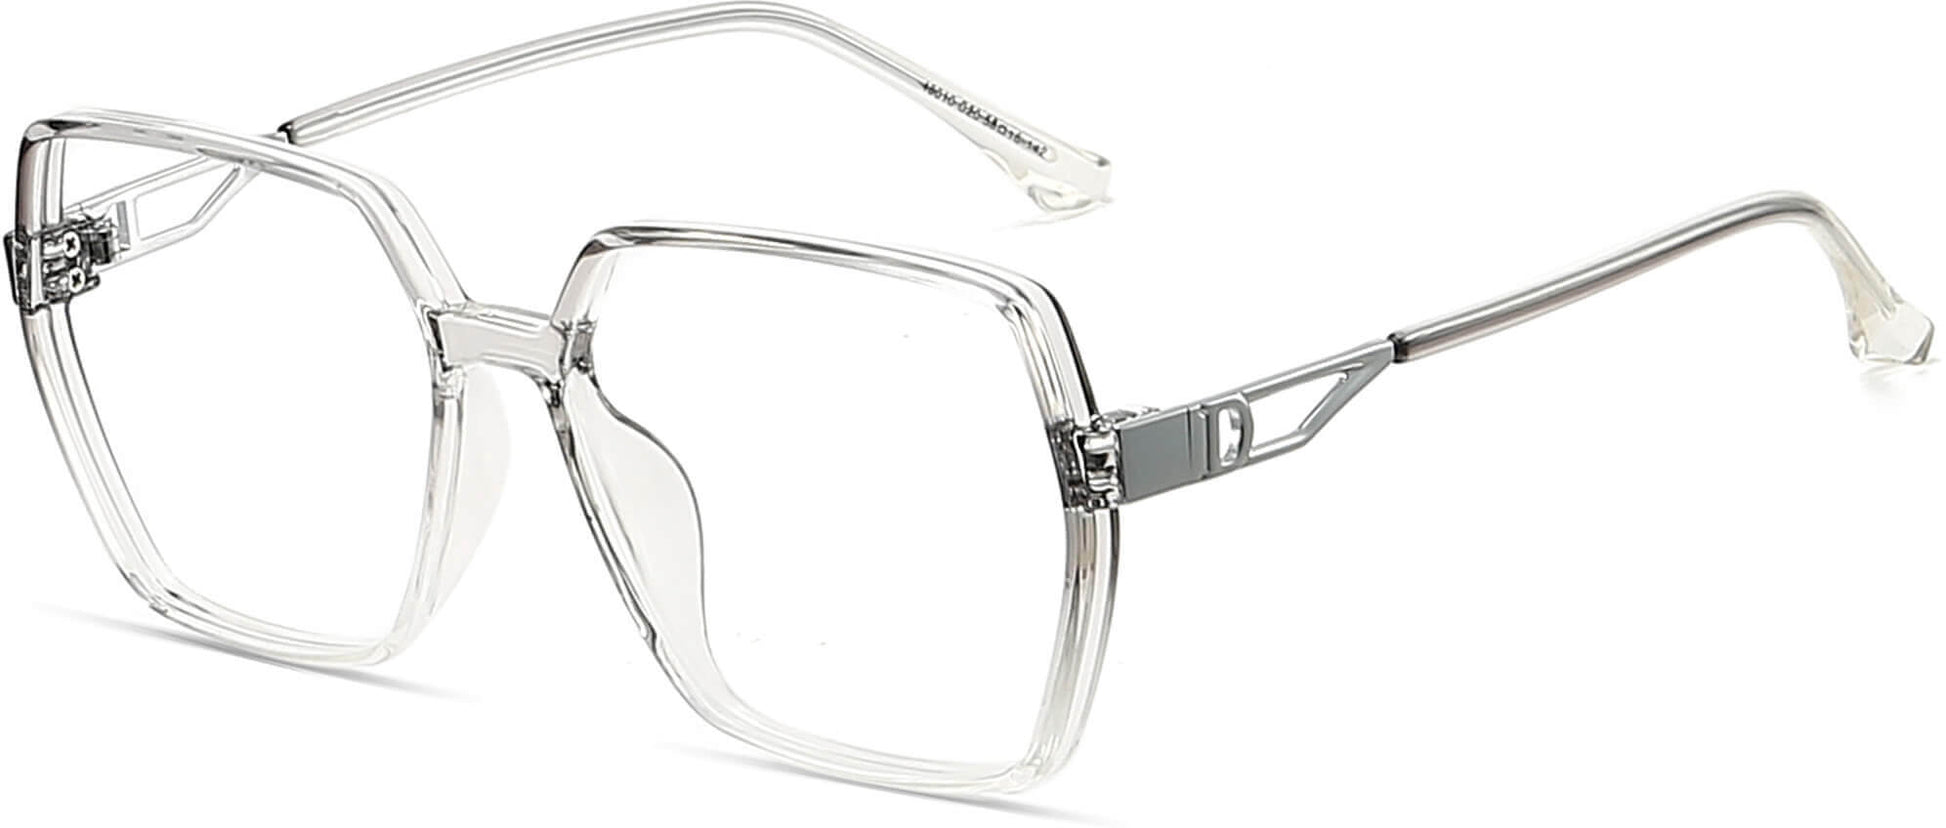 Pedro Geometric Gray Eyeglasses from ANRRI, angle view